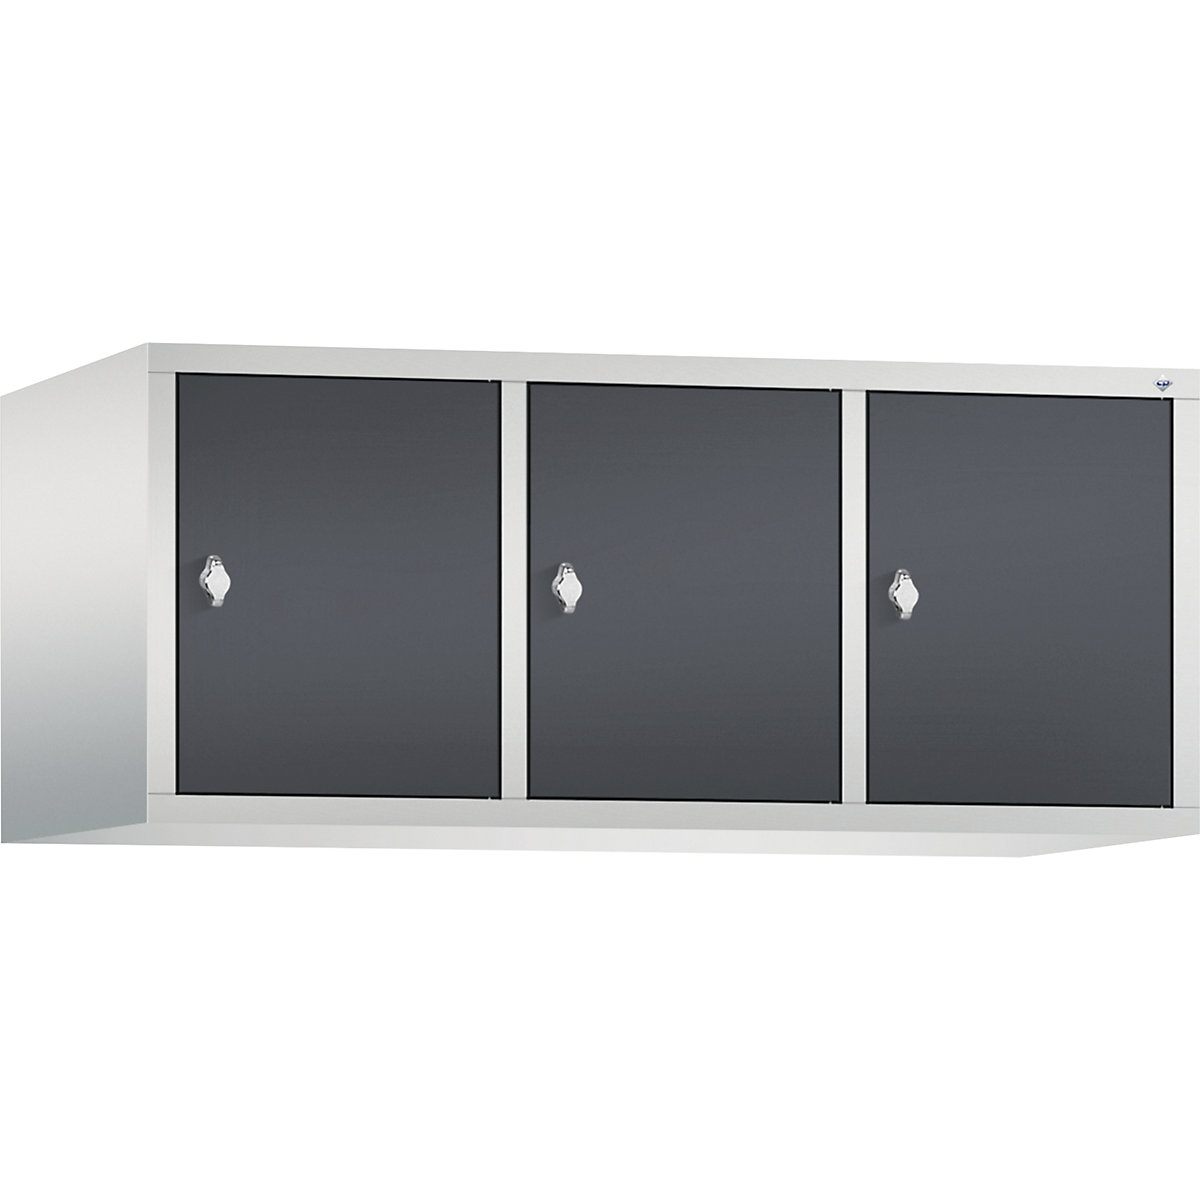 C+P – Altillo CLASSIC, 3 compartimentos, anchura de compartimento 400 mm, gris luminoso / gris negruzco